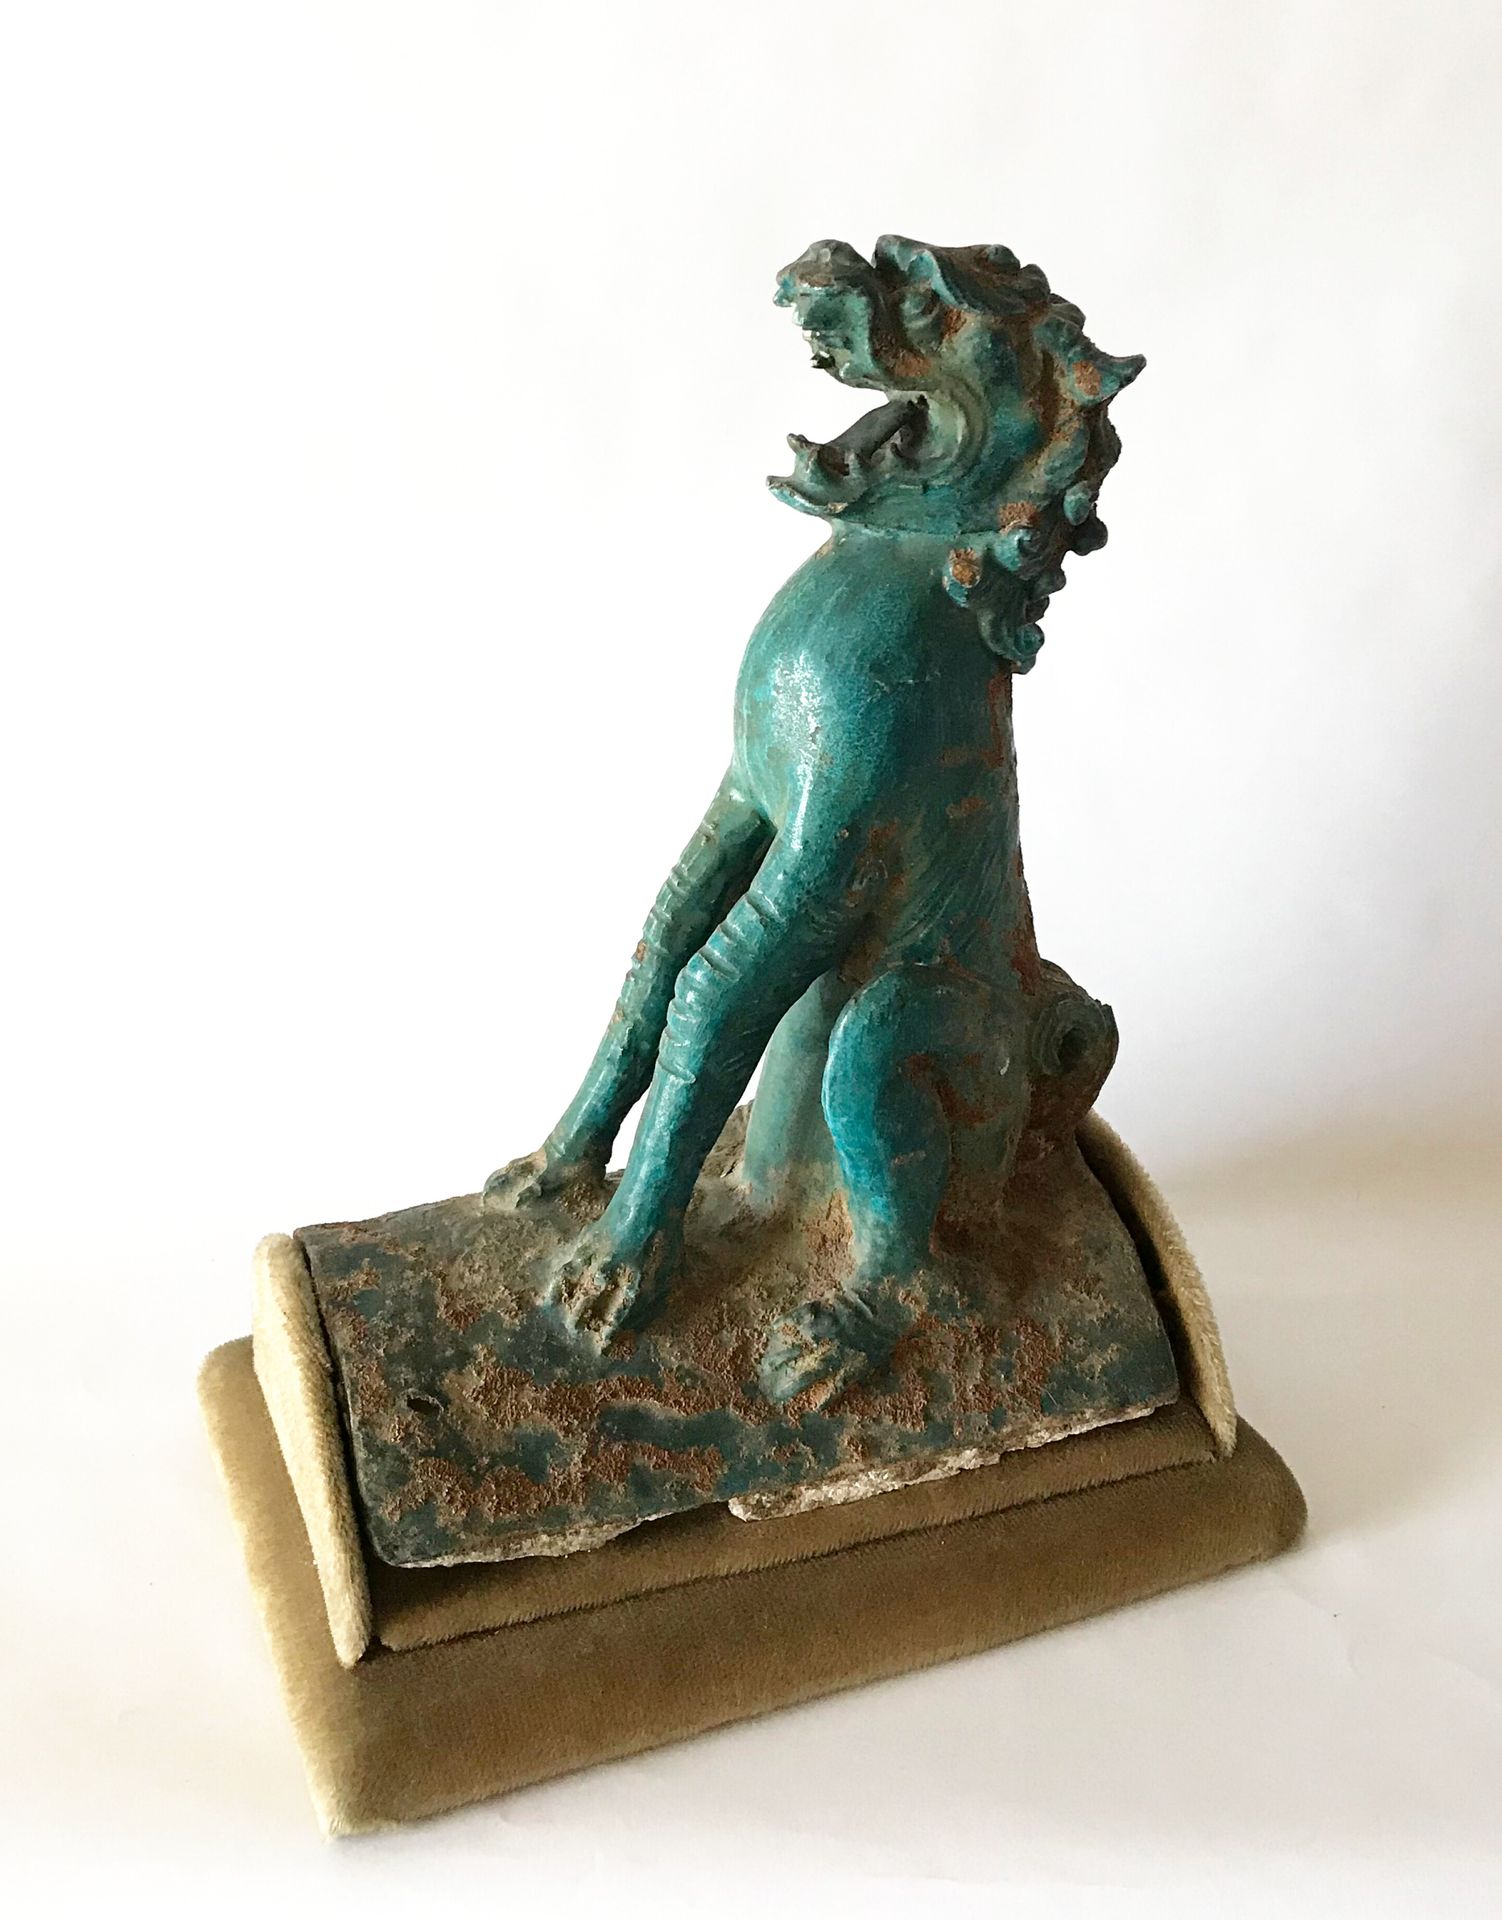 CHINE 中国

蓝色釉面陶瓷屋瓦，形状为坐着的能人之狗。19世纪

H.35厘米

小事故，天鹅绒底座